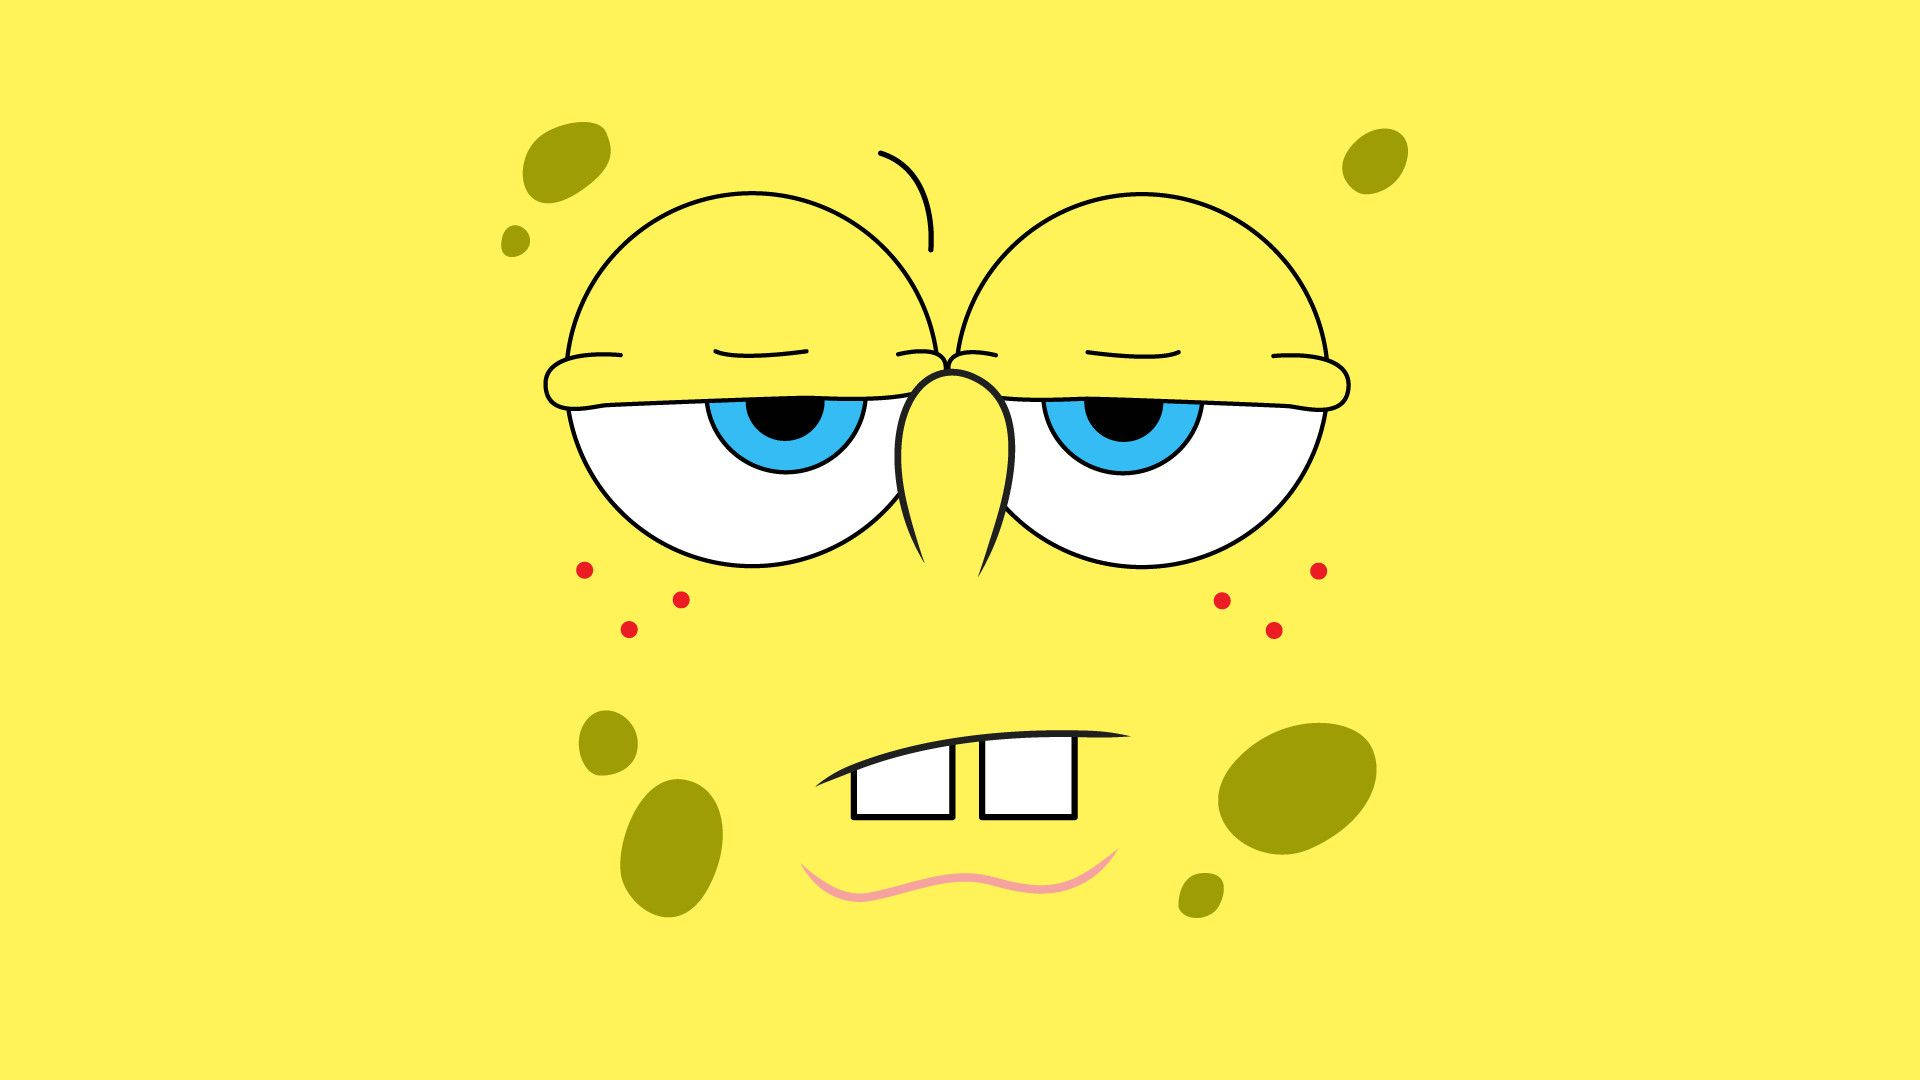 Cute Spongebob Squarepants Sarcastic Face Wallpaper